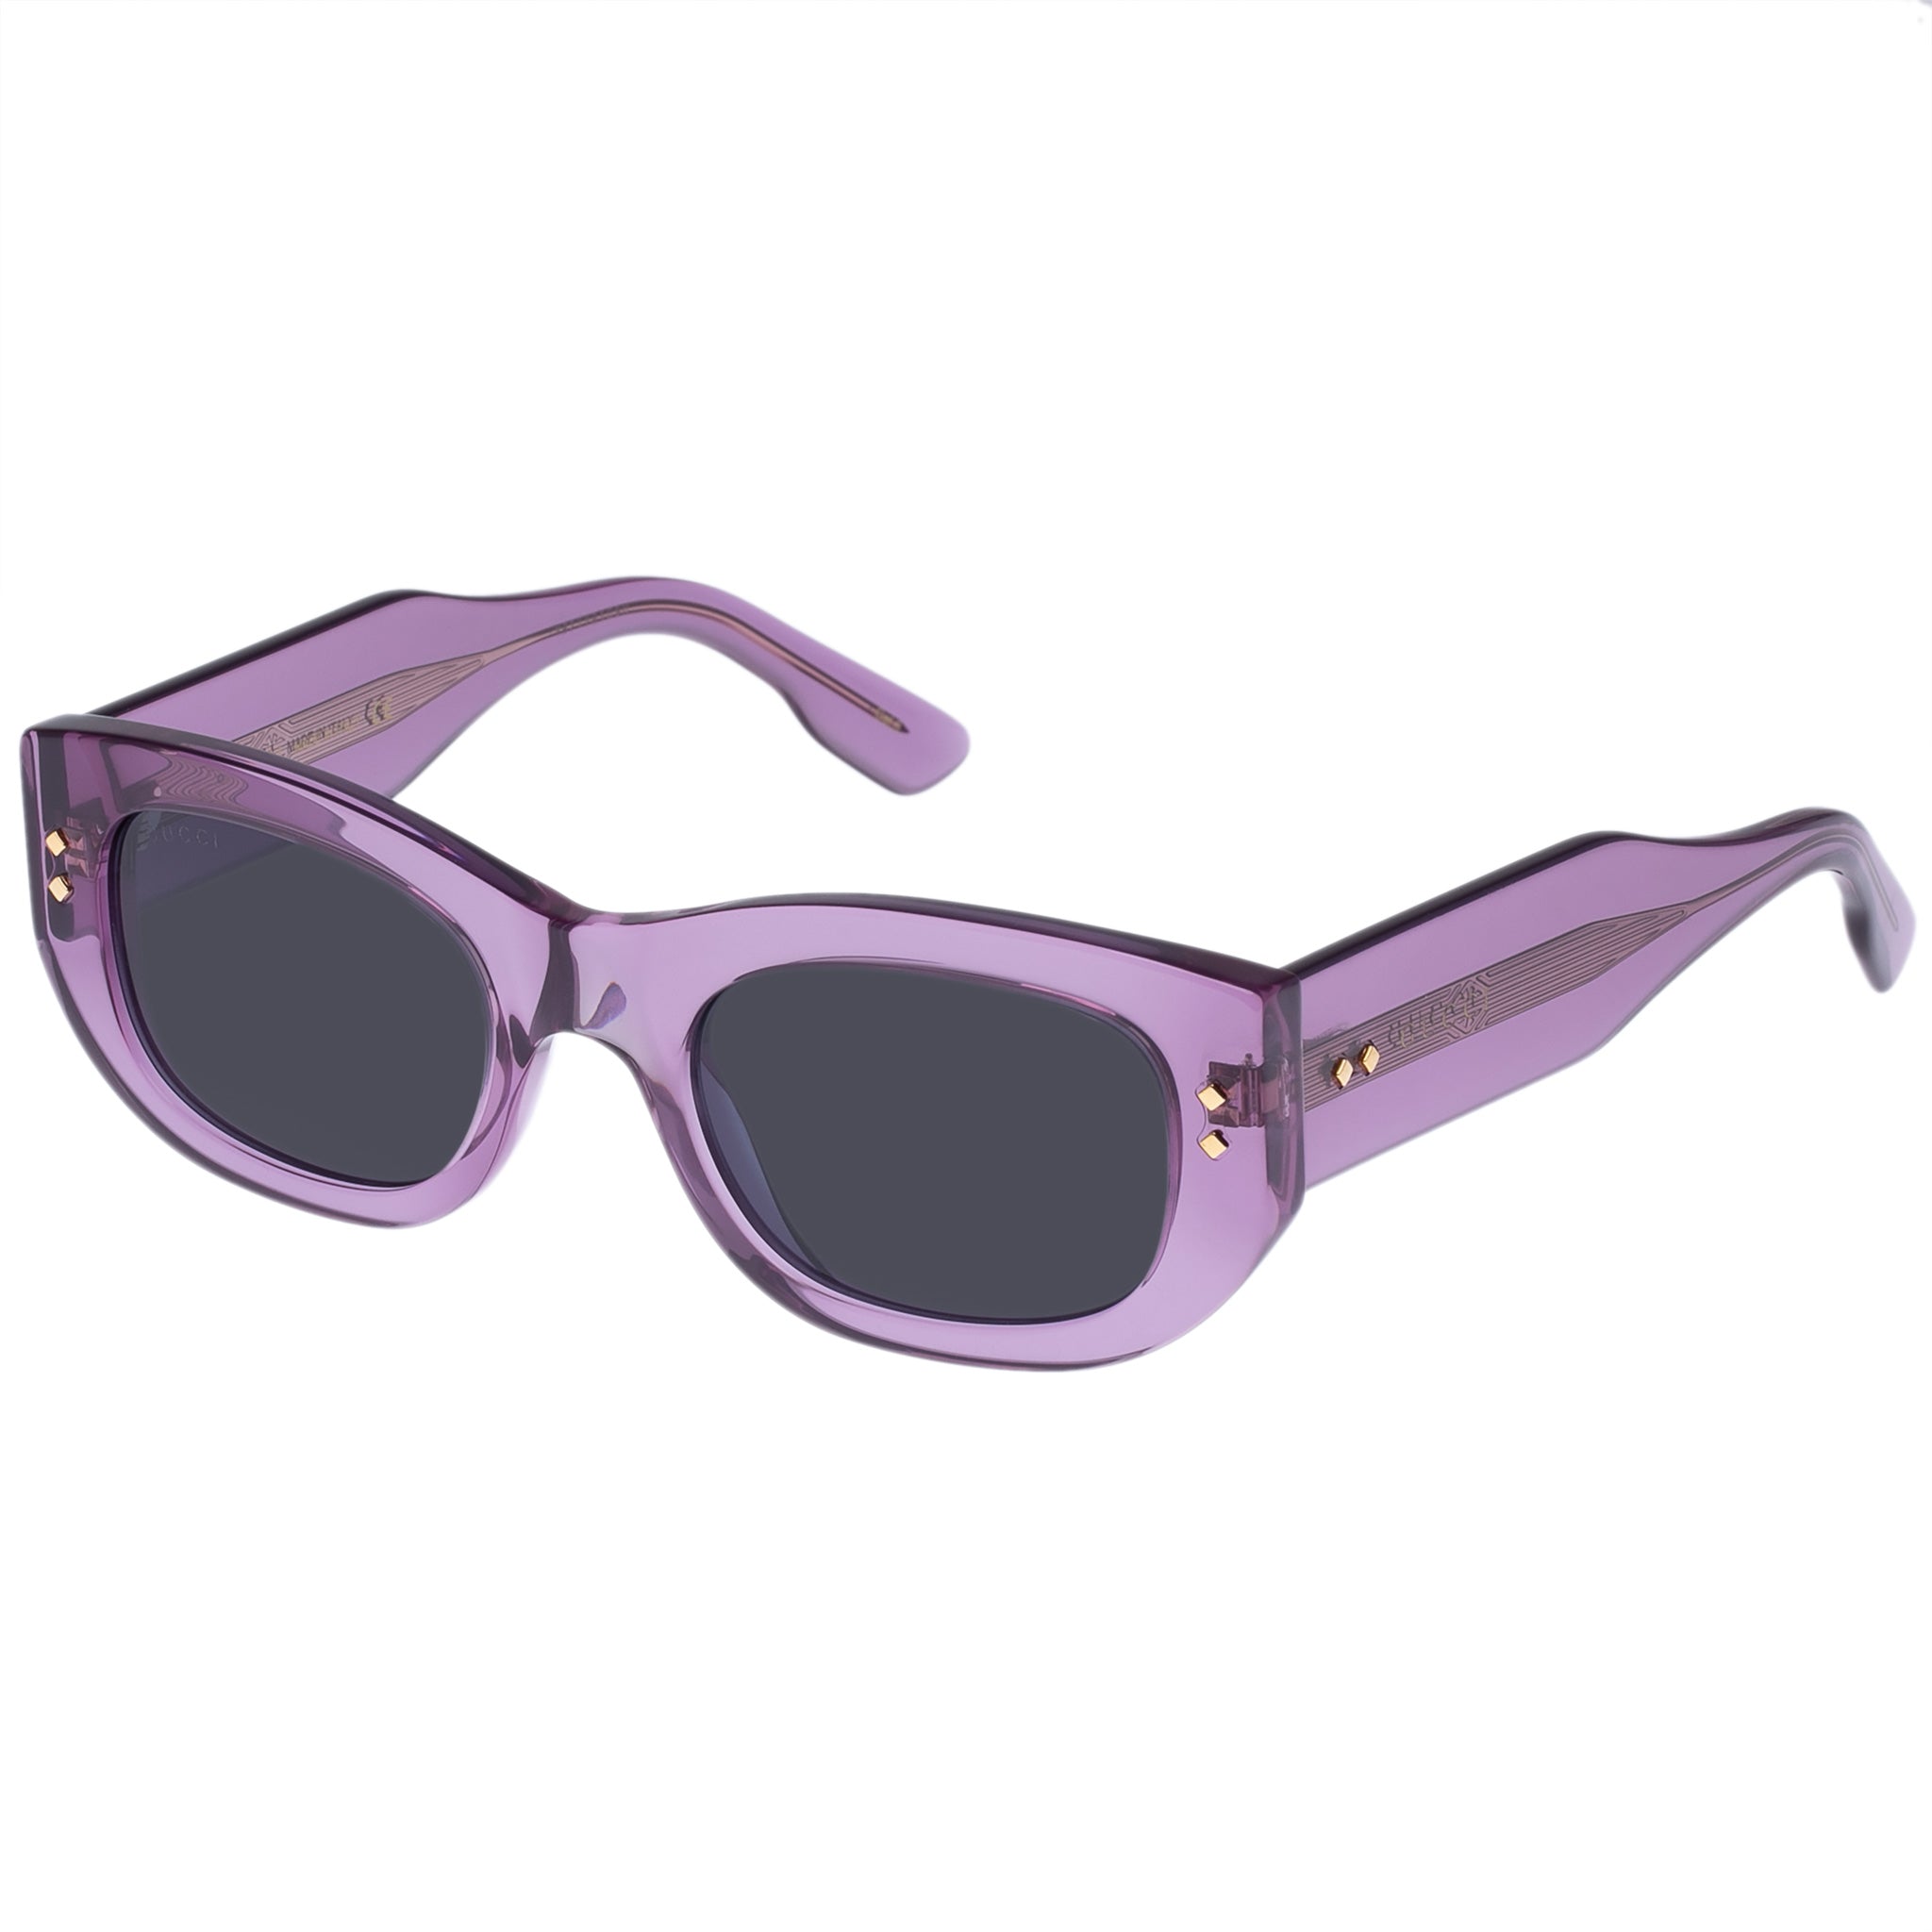 Women's BGL 2009 Shiny Purple and Gunmetal Sunglasses - Purple